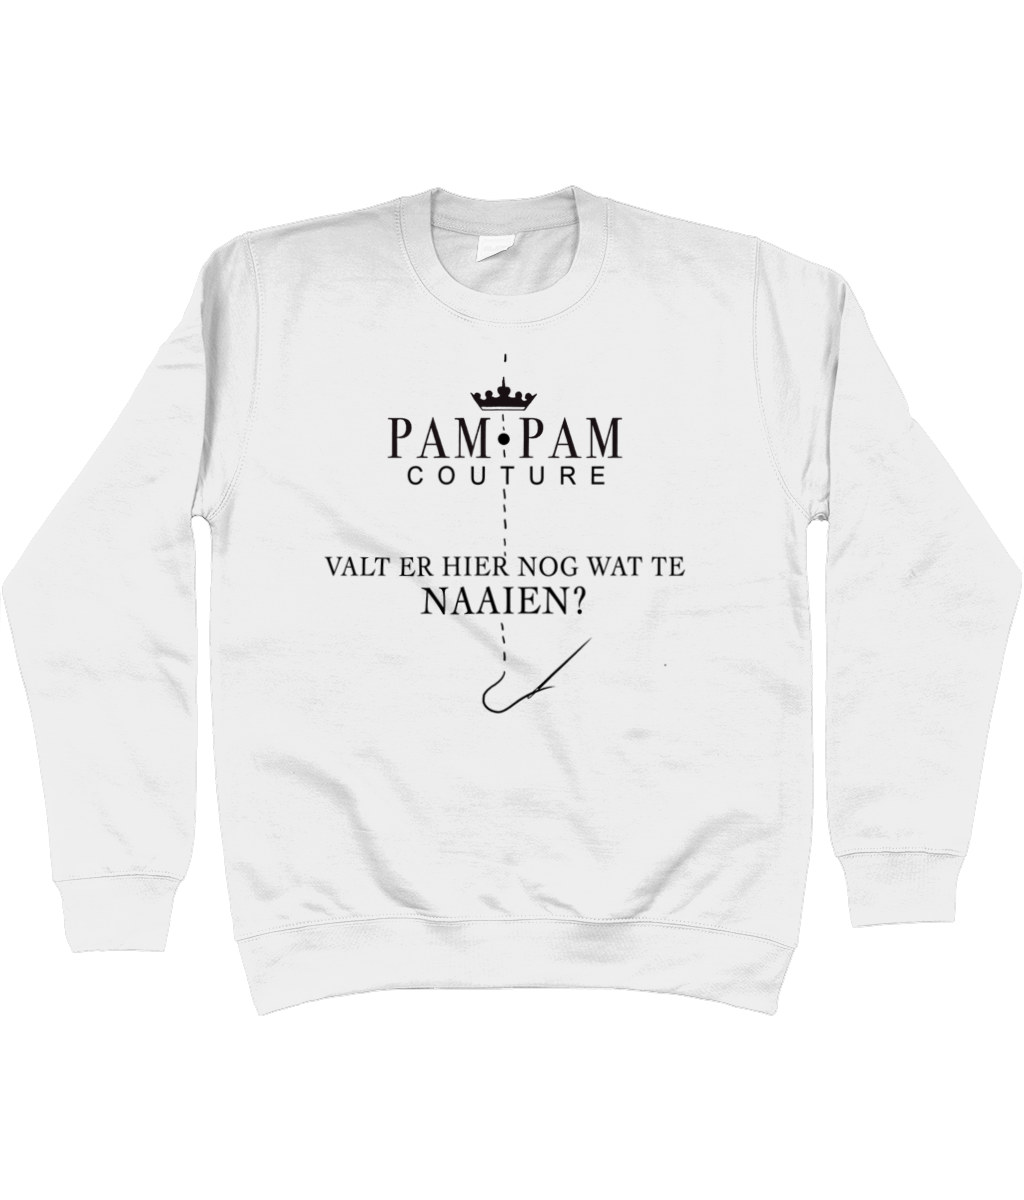 Patty Pam-Pam - Couture Sweatshirt